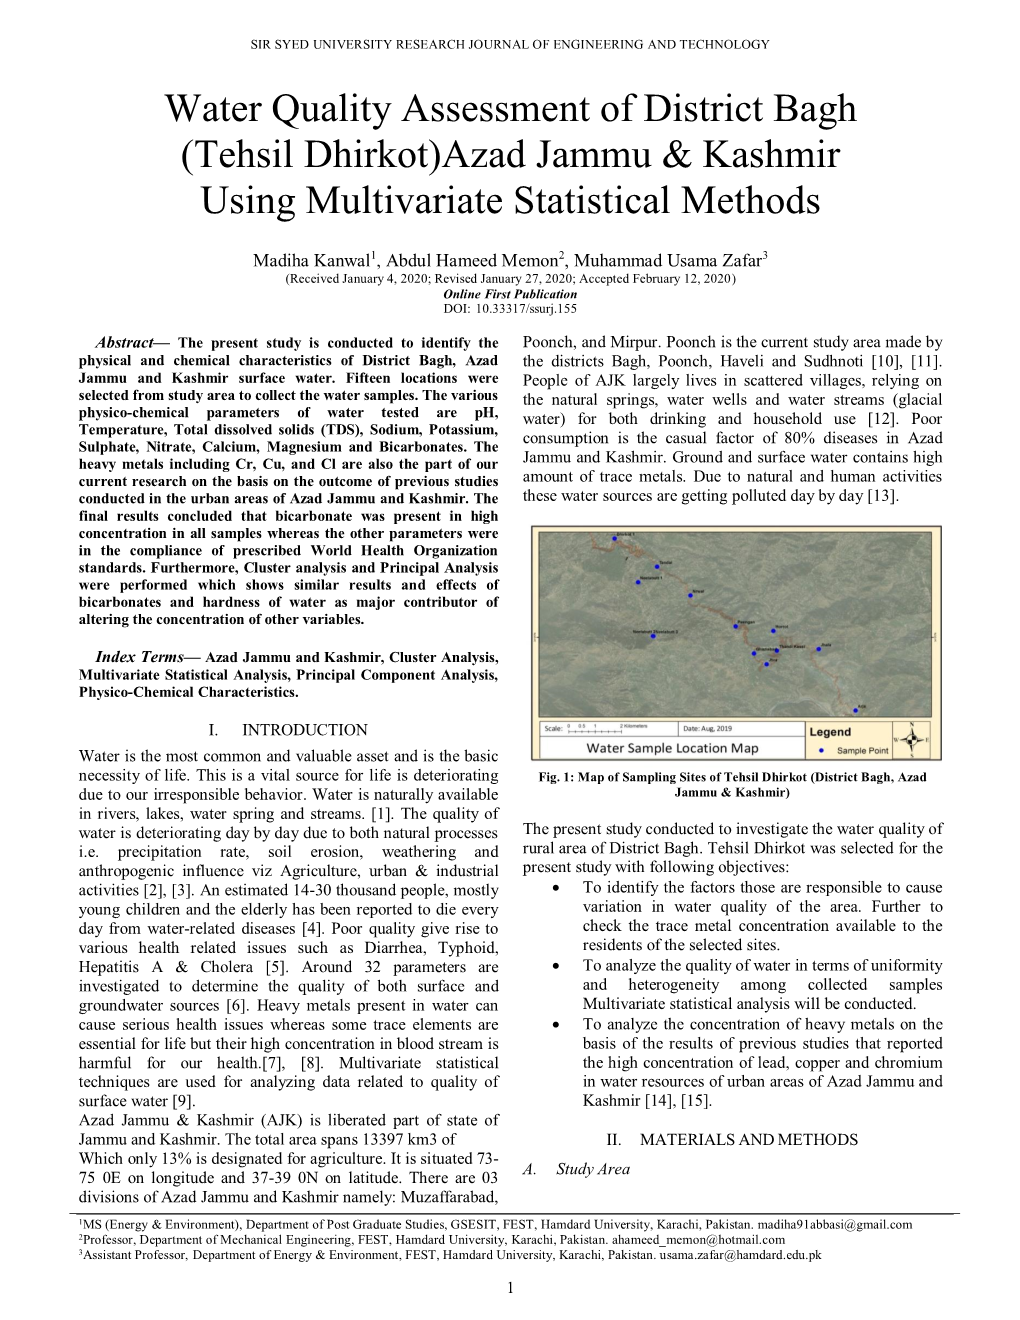 Water Quality Assessment of District Bagh (Tehsil Dhirkot)Azad Jammu & Kashmir Using Multivariate Statistical Methods